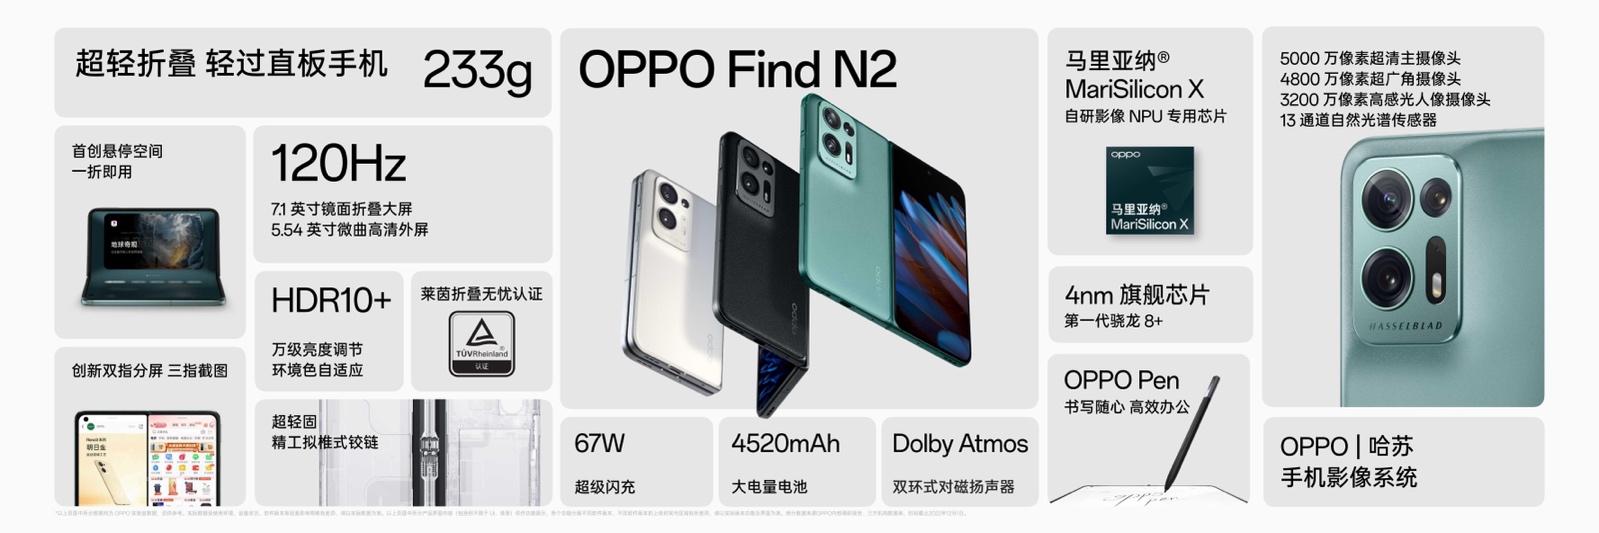 OPPO发布全新一代Find N2系列，引领折叠屏从“常用”到“重用”的关键进化